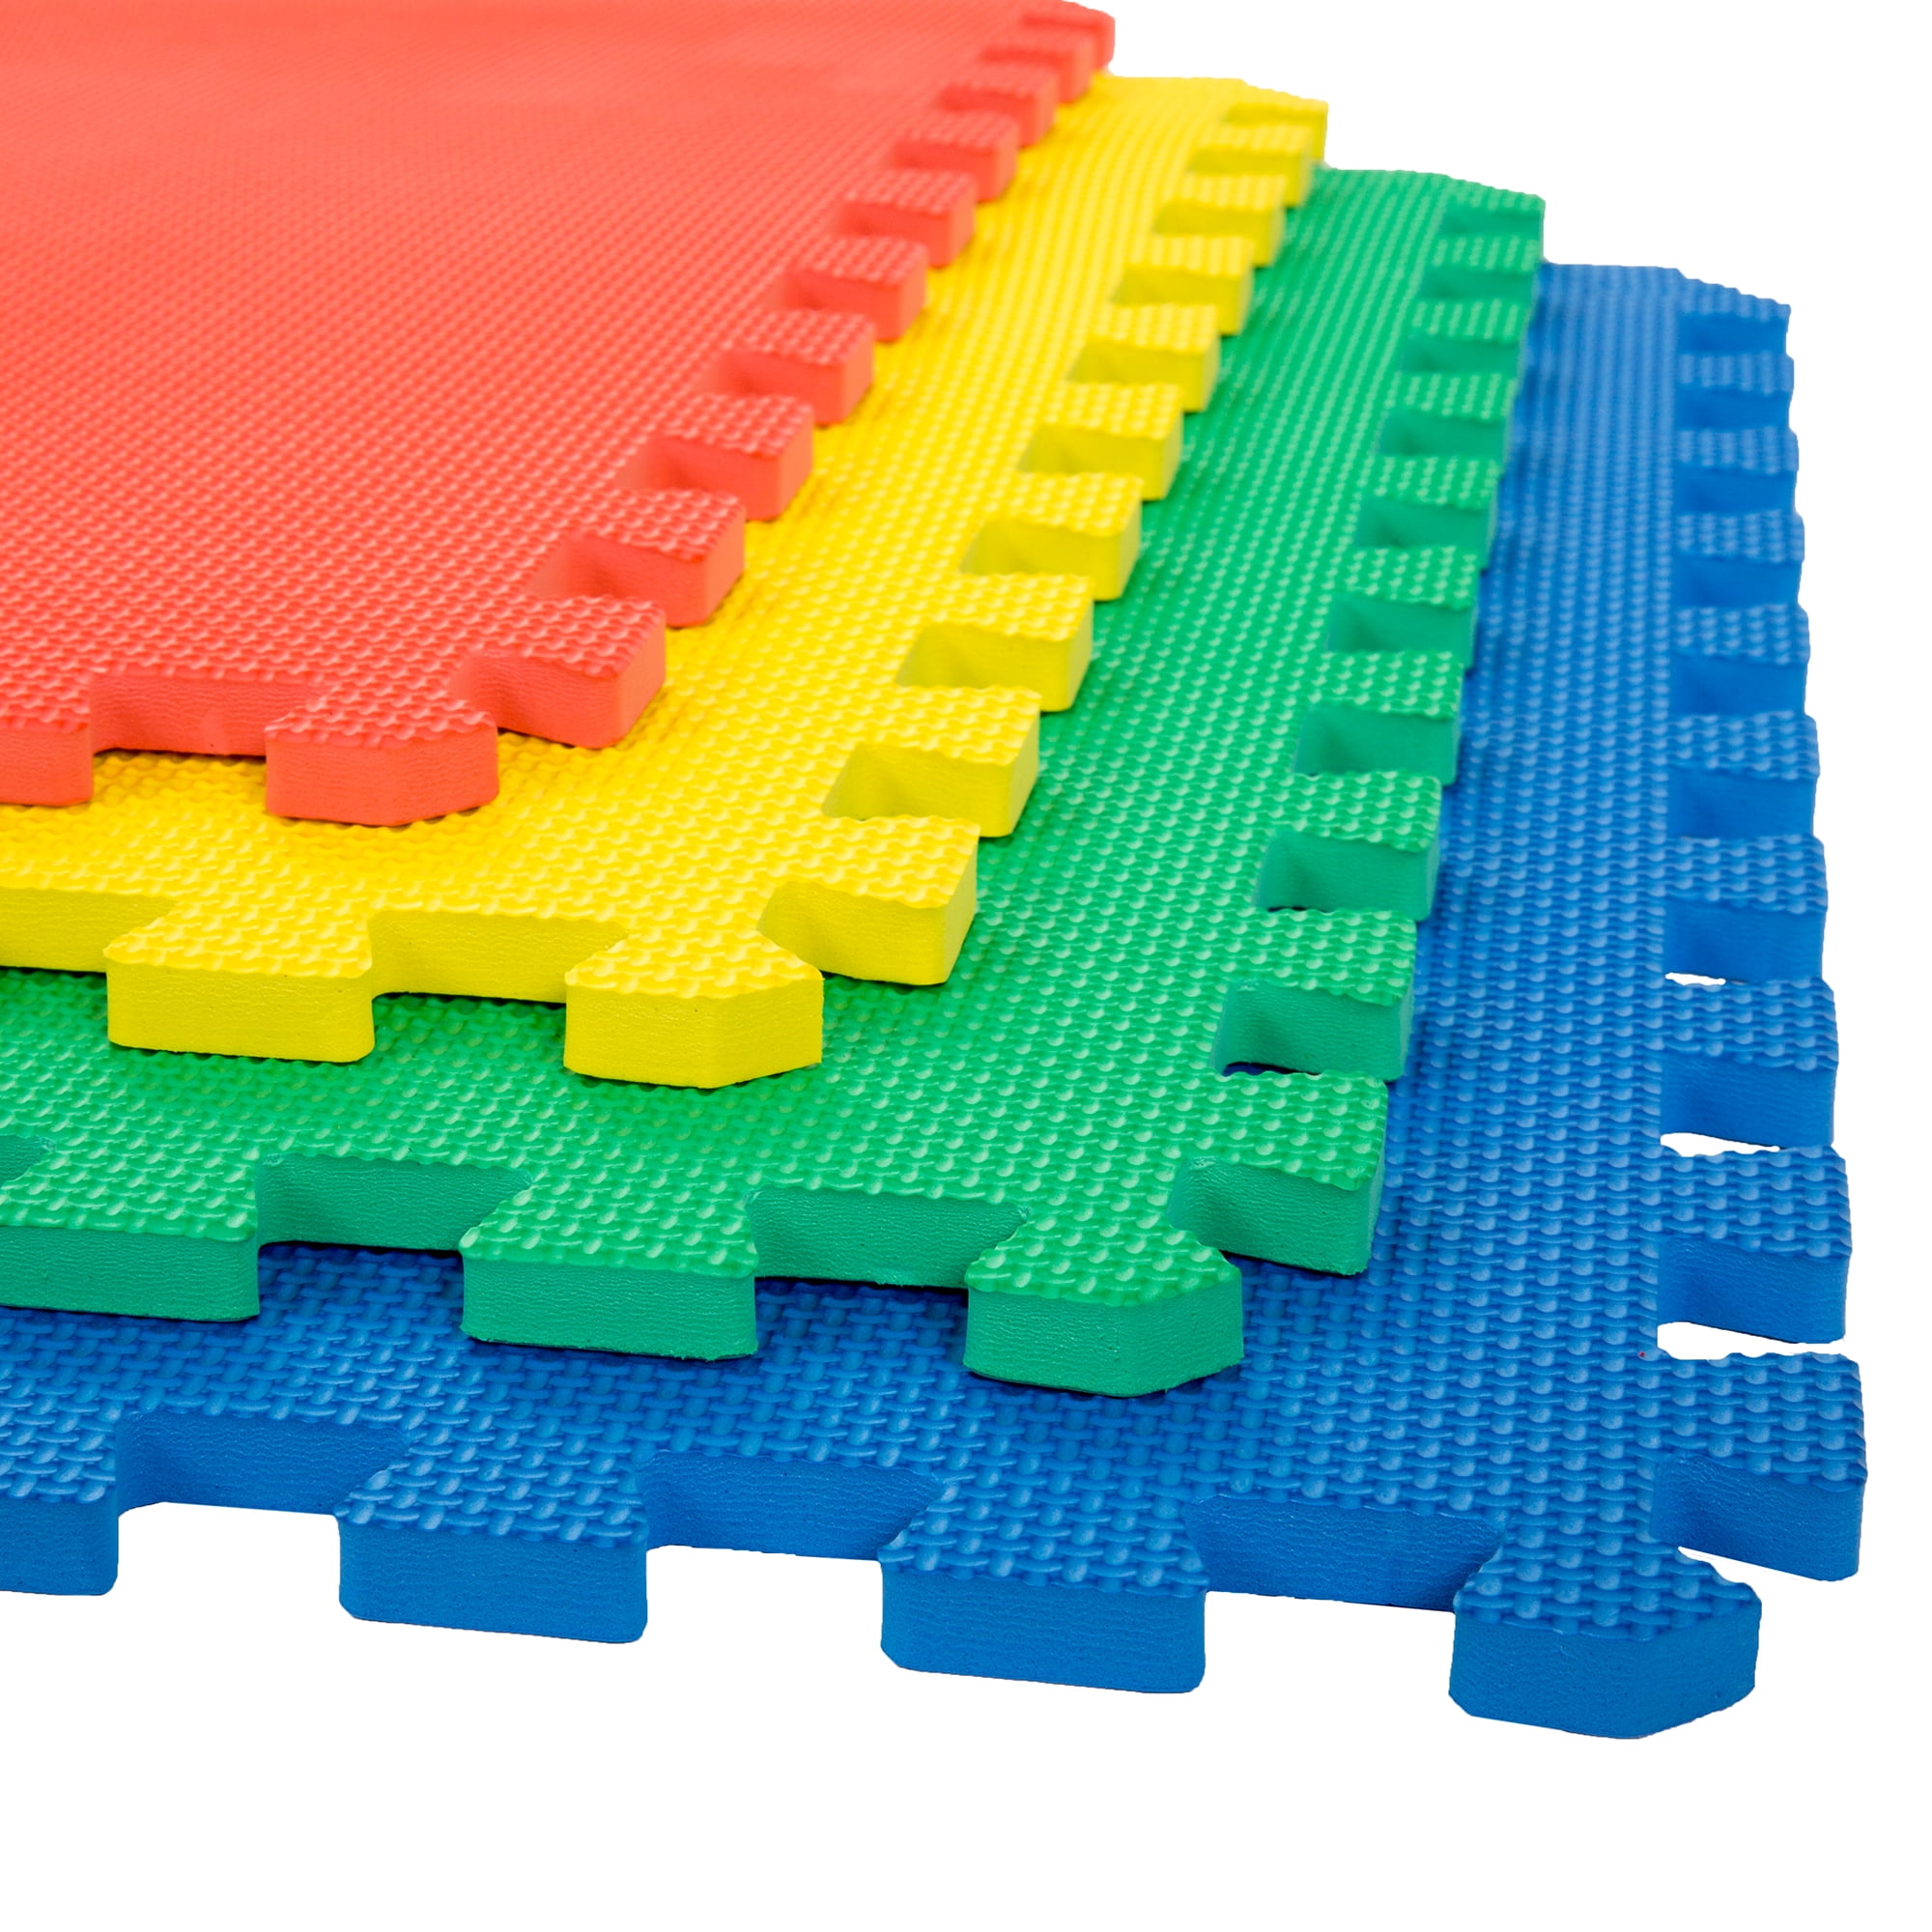 SE Large interlocking Soft EVA Foam Mats Kids Play/Gym/Exercise Floor Tiles 